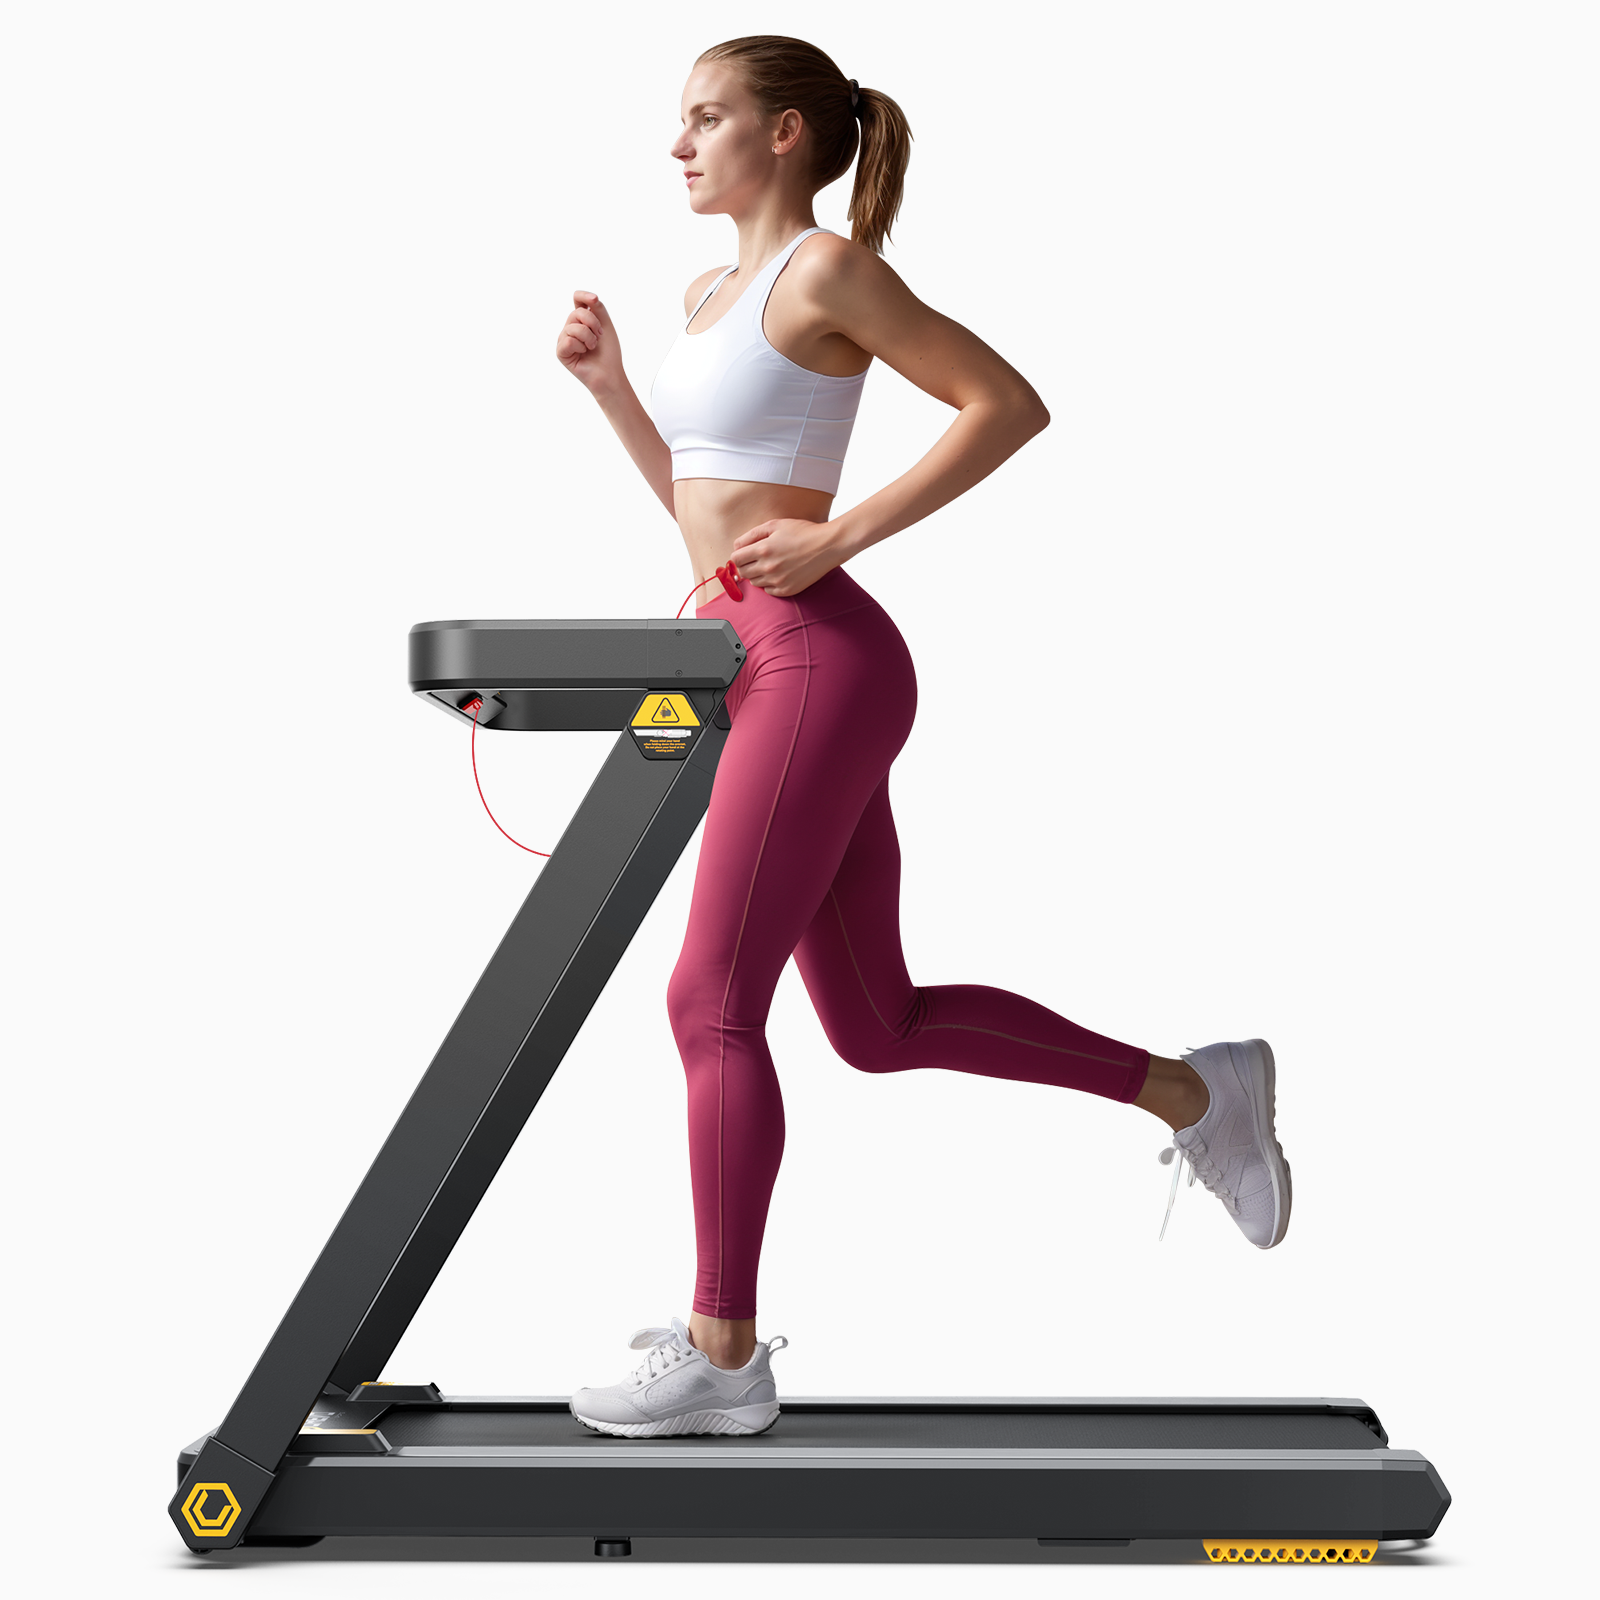 Urevo Strol 3 Treadmill